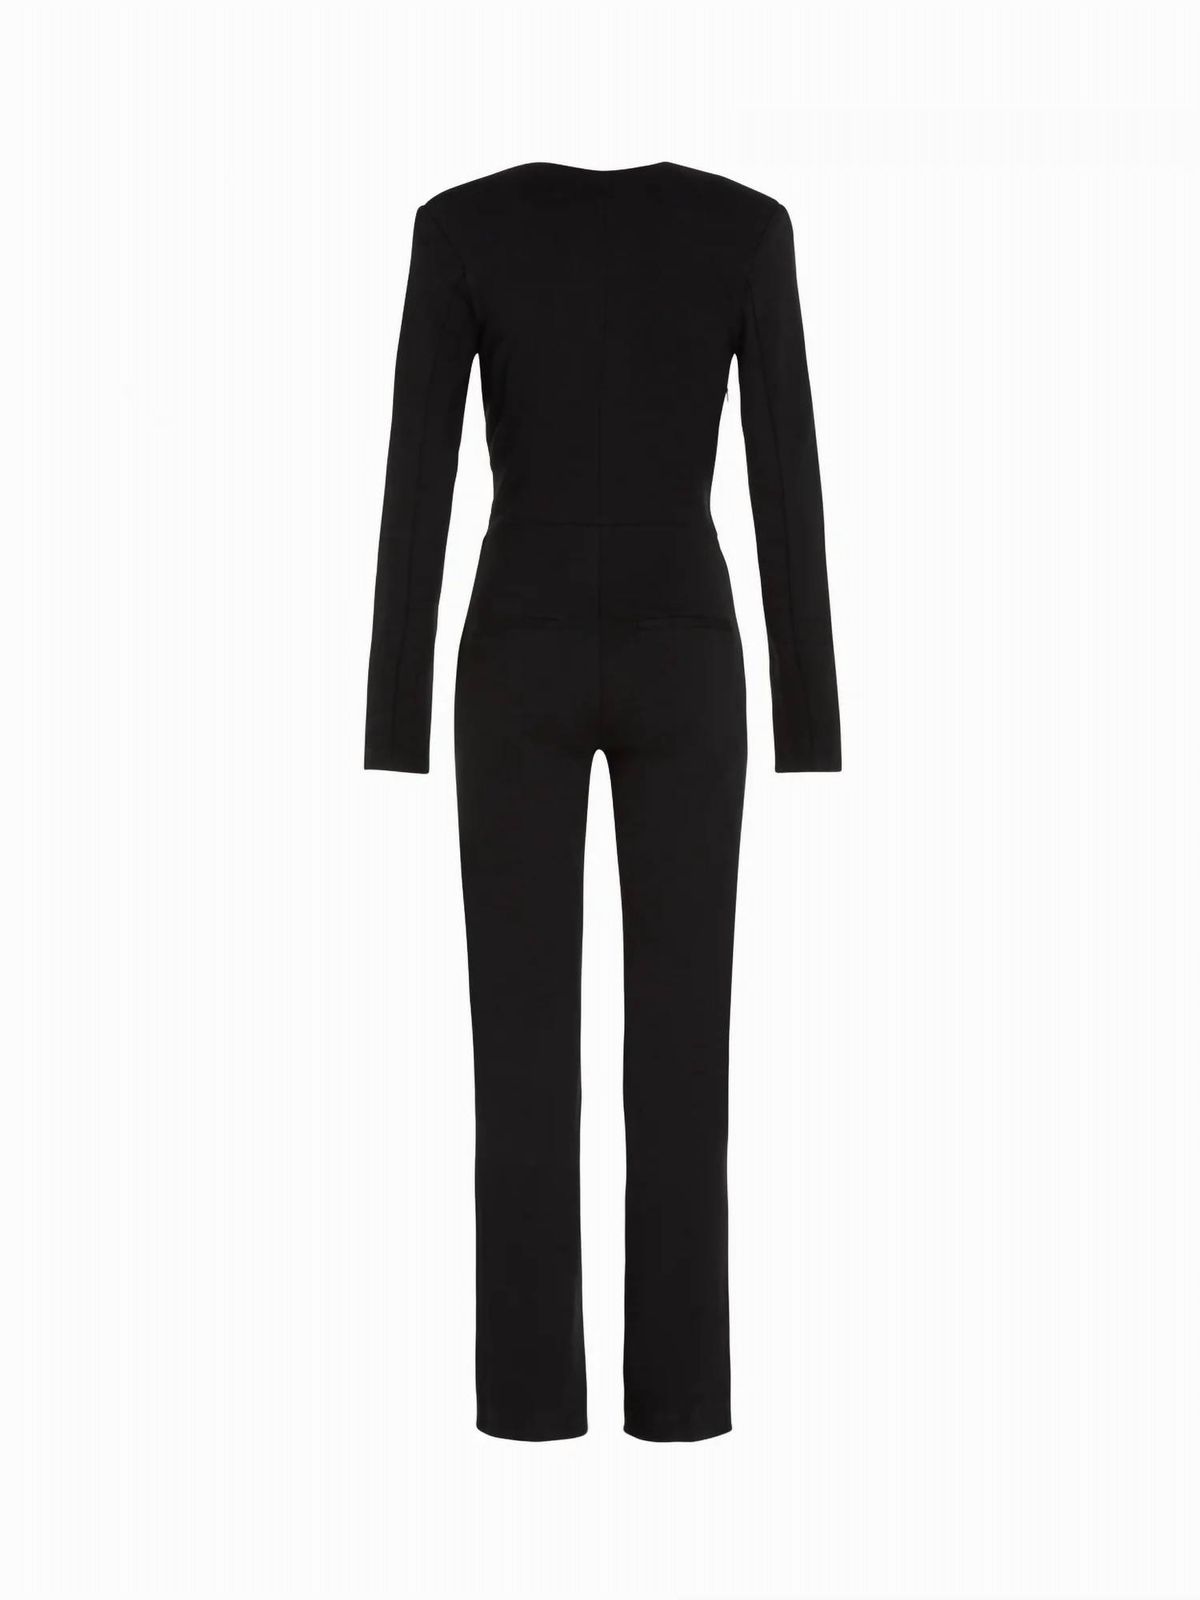 Style 1-3467363907-1572 GAUGE 81 Plus Size 42 Plunge Black Formal Jumpsuit on Queenly